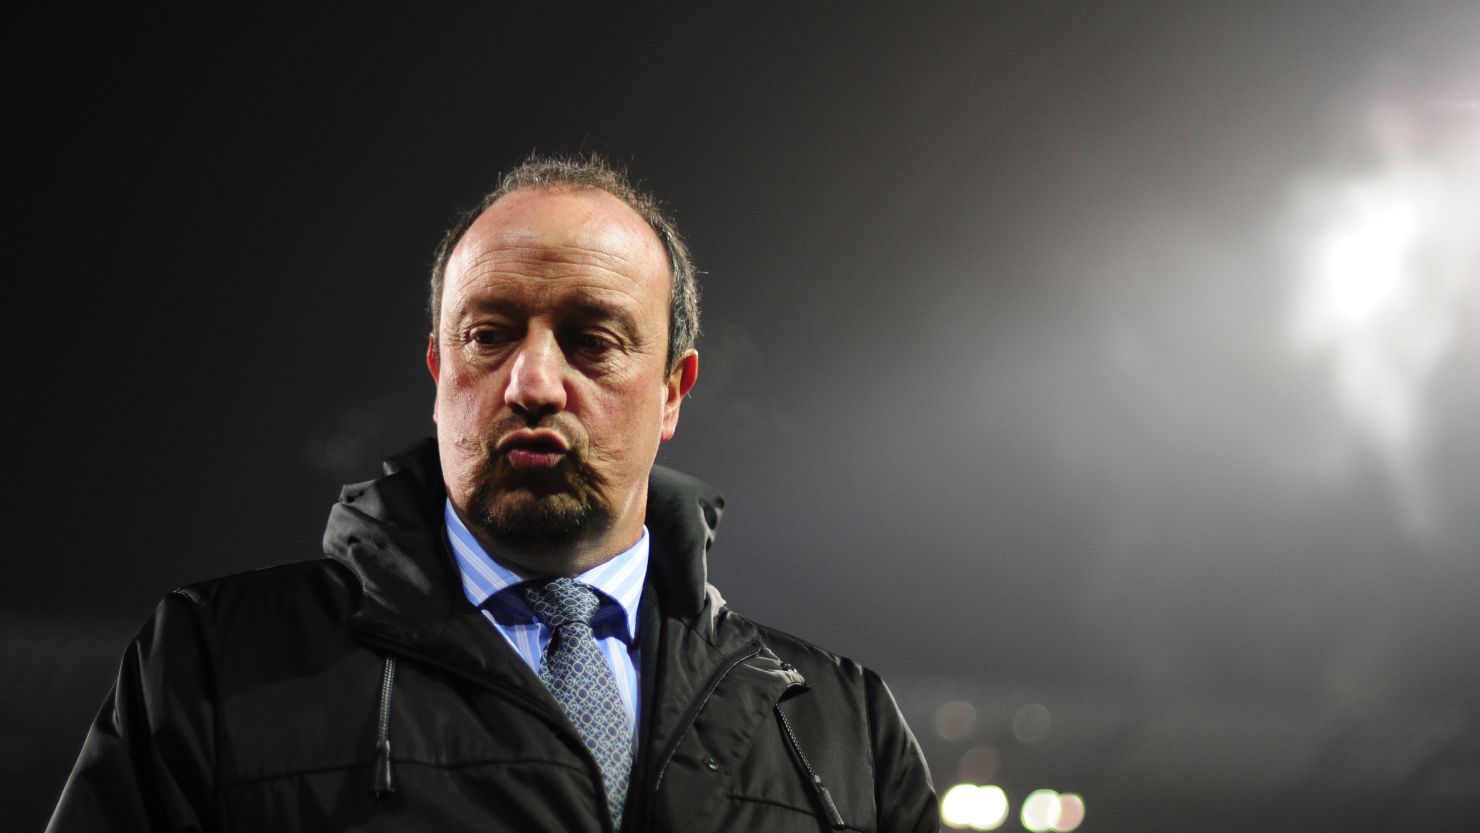 Rafael Benitez will take immediate charge of Chelsea after the sacking of Roberto Di Matteo.  